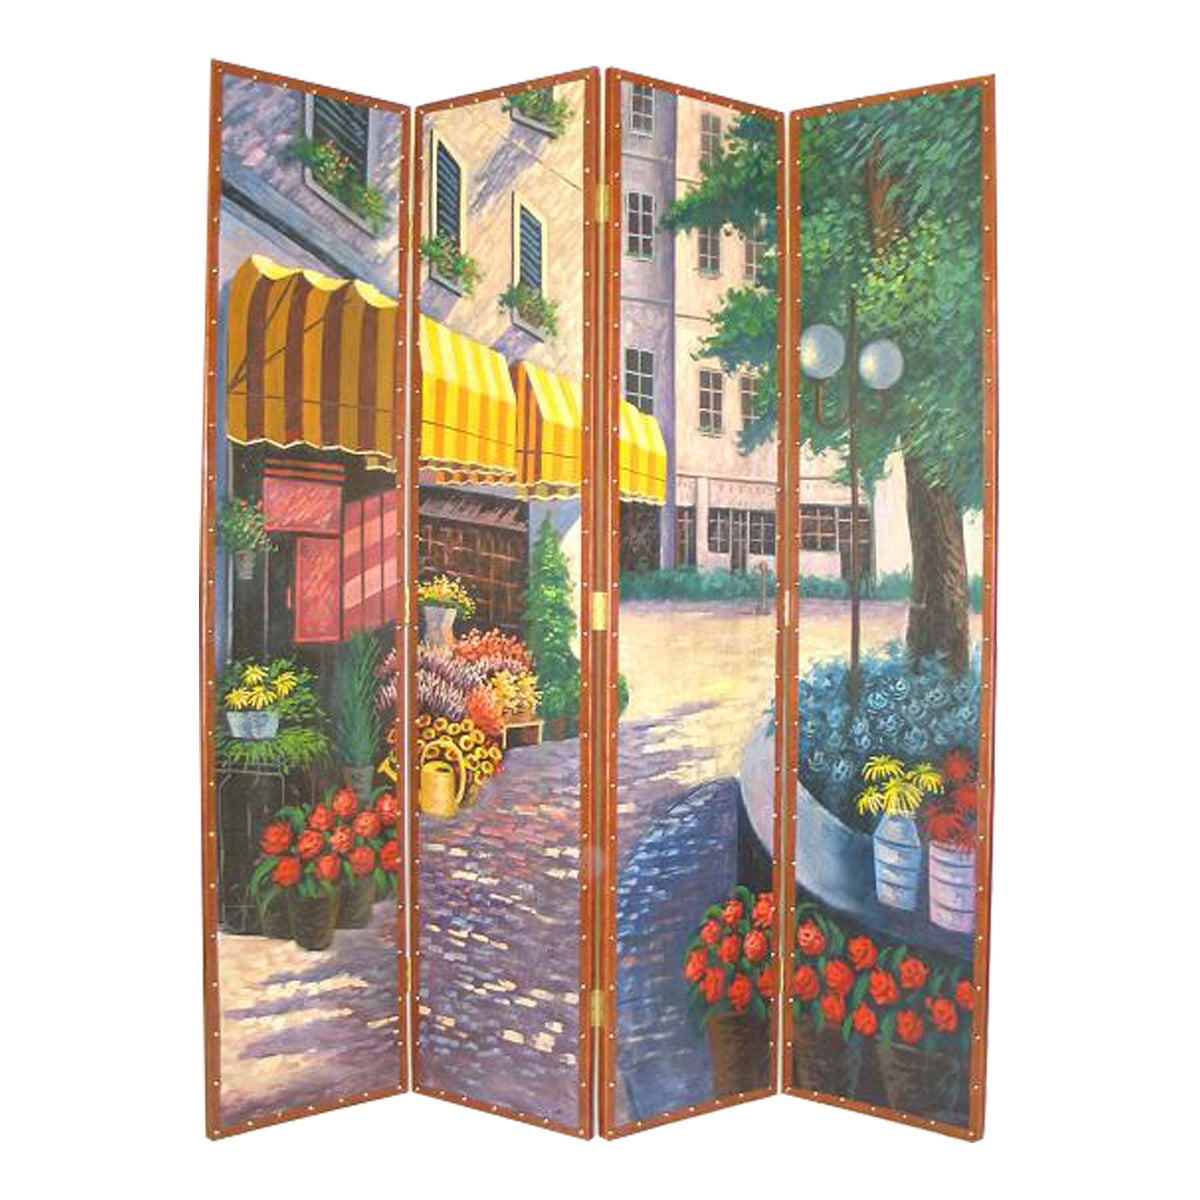 Bm213490 Leatherette Wooden 4 Panel Room Divider With Flower Market Theme - Multi Color